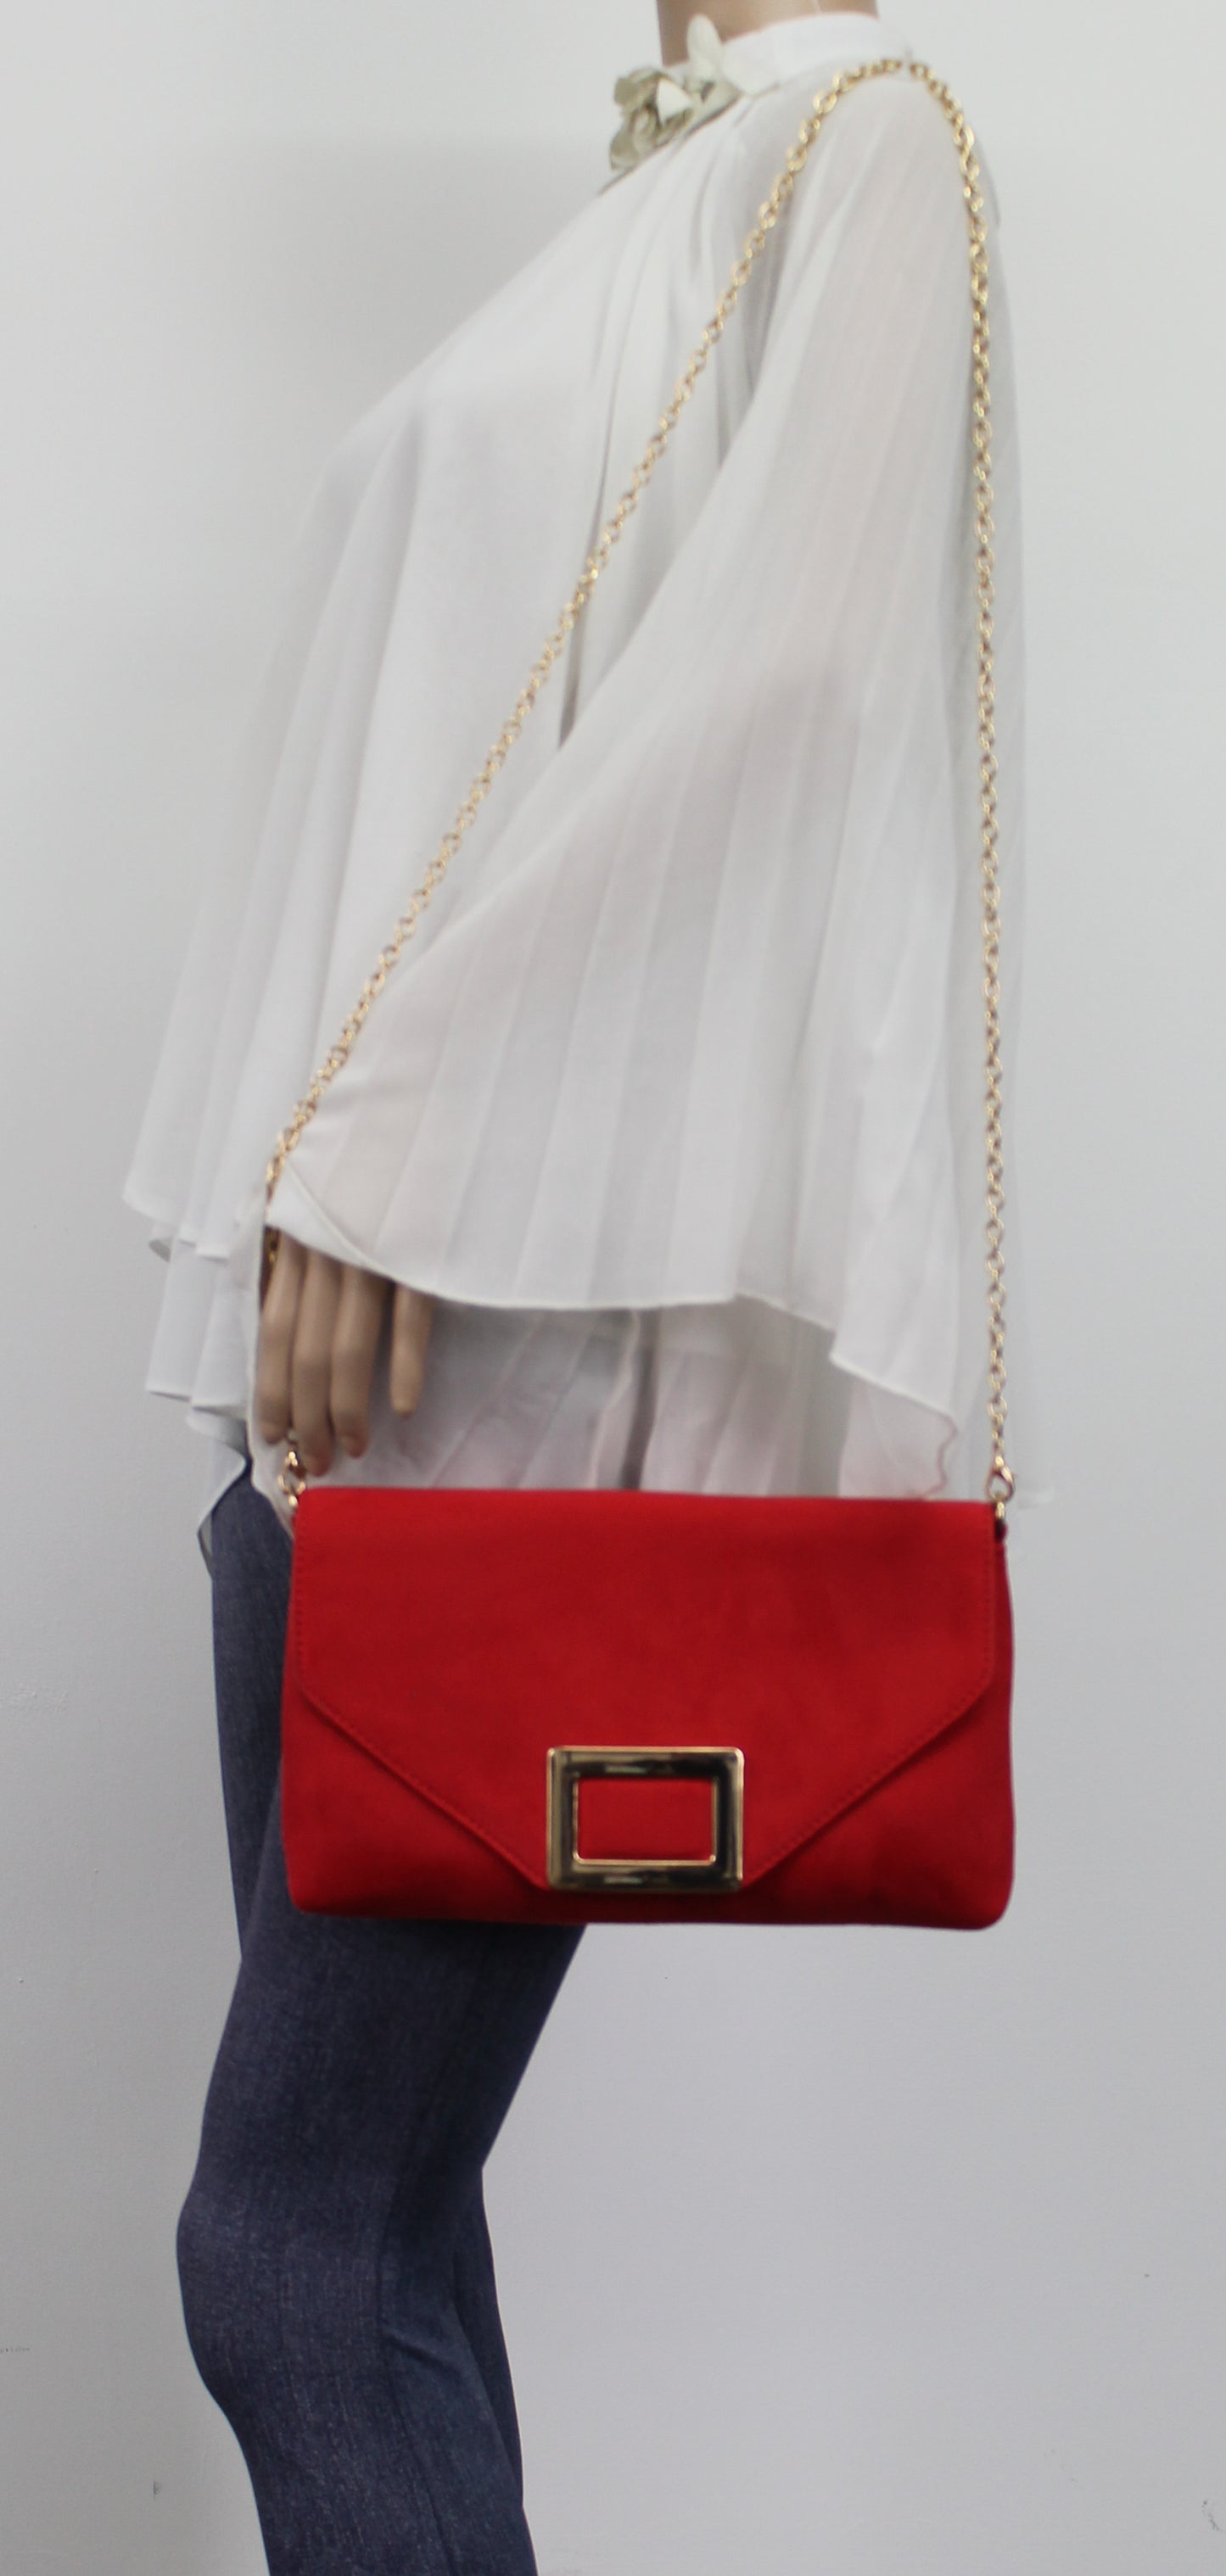 SWANKYSWANS Georgia Clutch Bag Red Cute Cheap Clutch Bag For Weddings School and Work